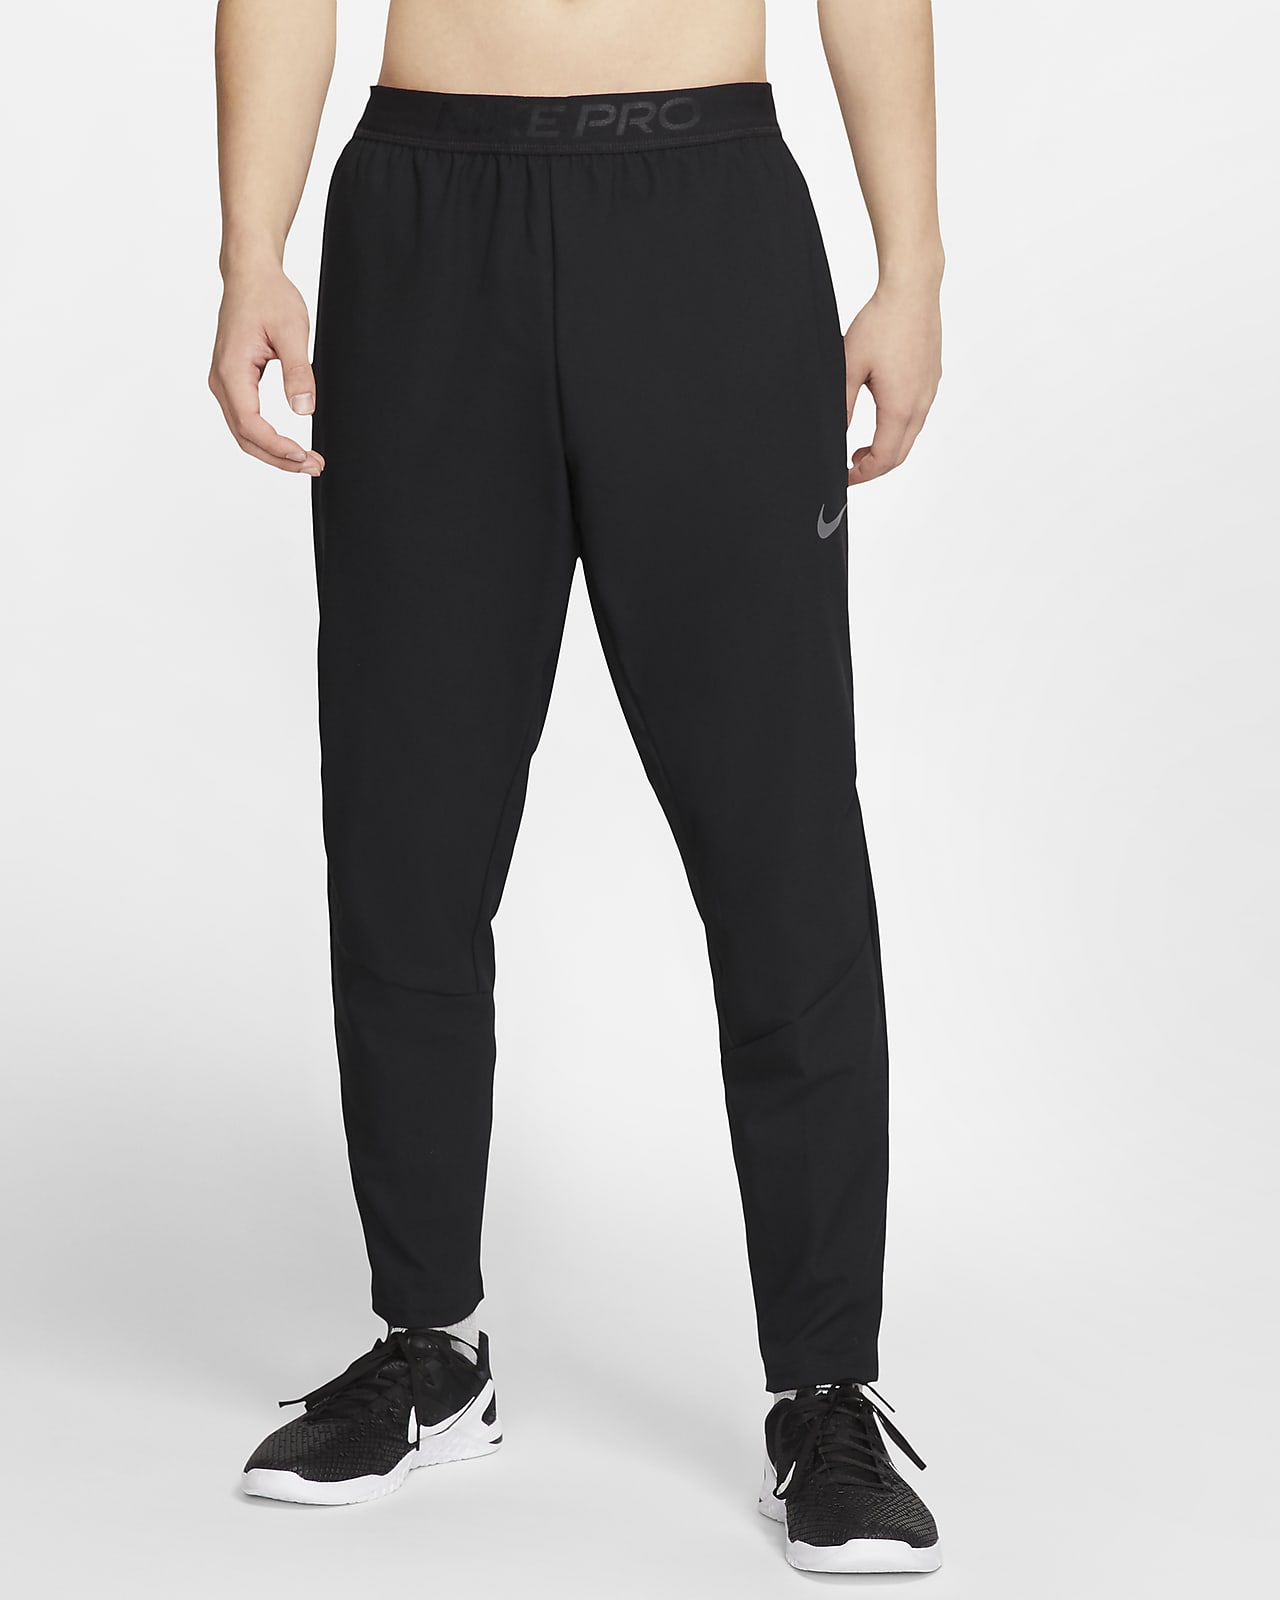 Nike  Flex Mens Training Pants  Black  SportsDirectcom